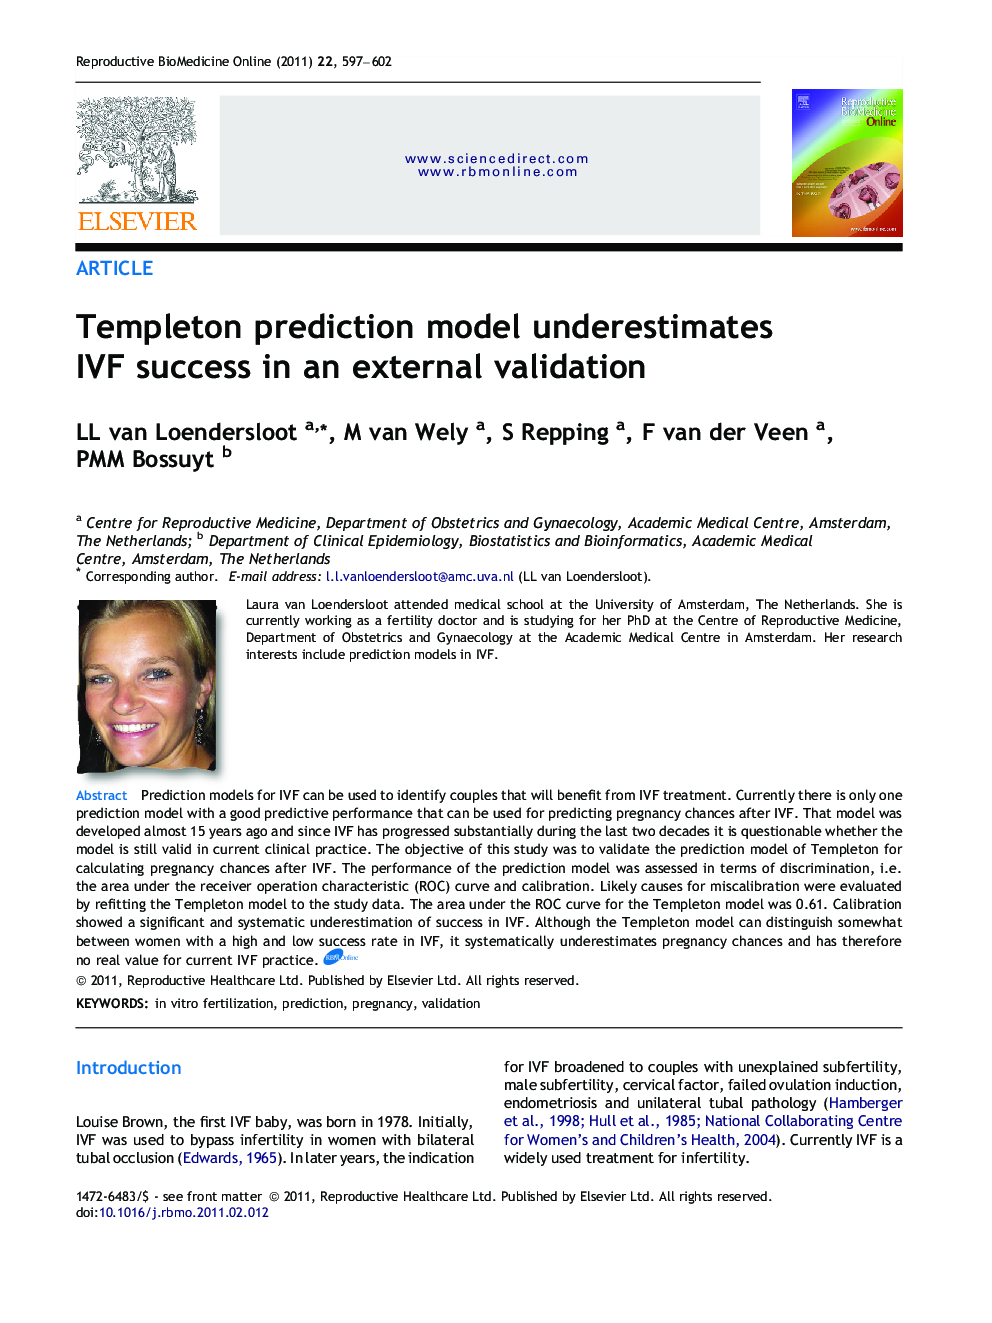 Templeton prediction model underestimates IVF success in an external validation 